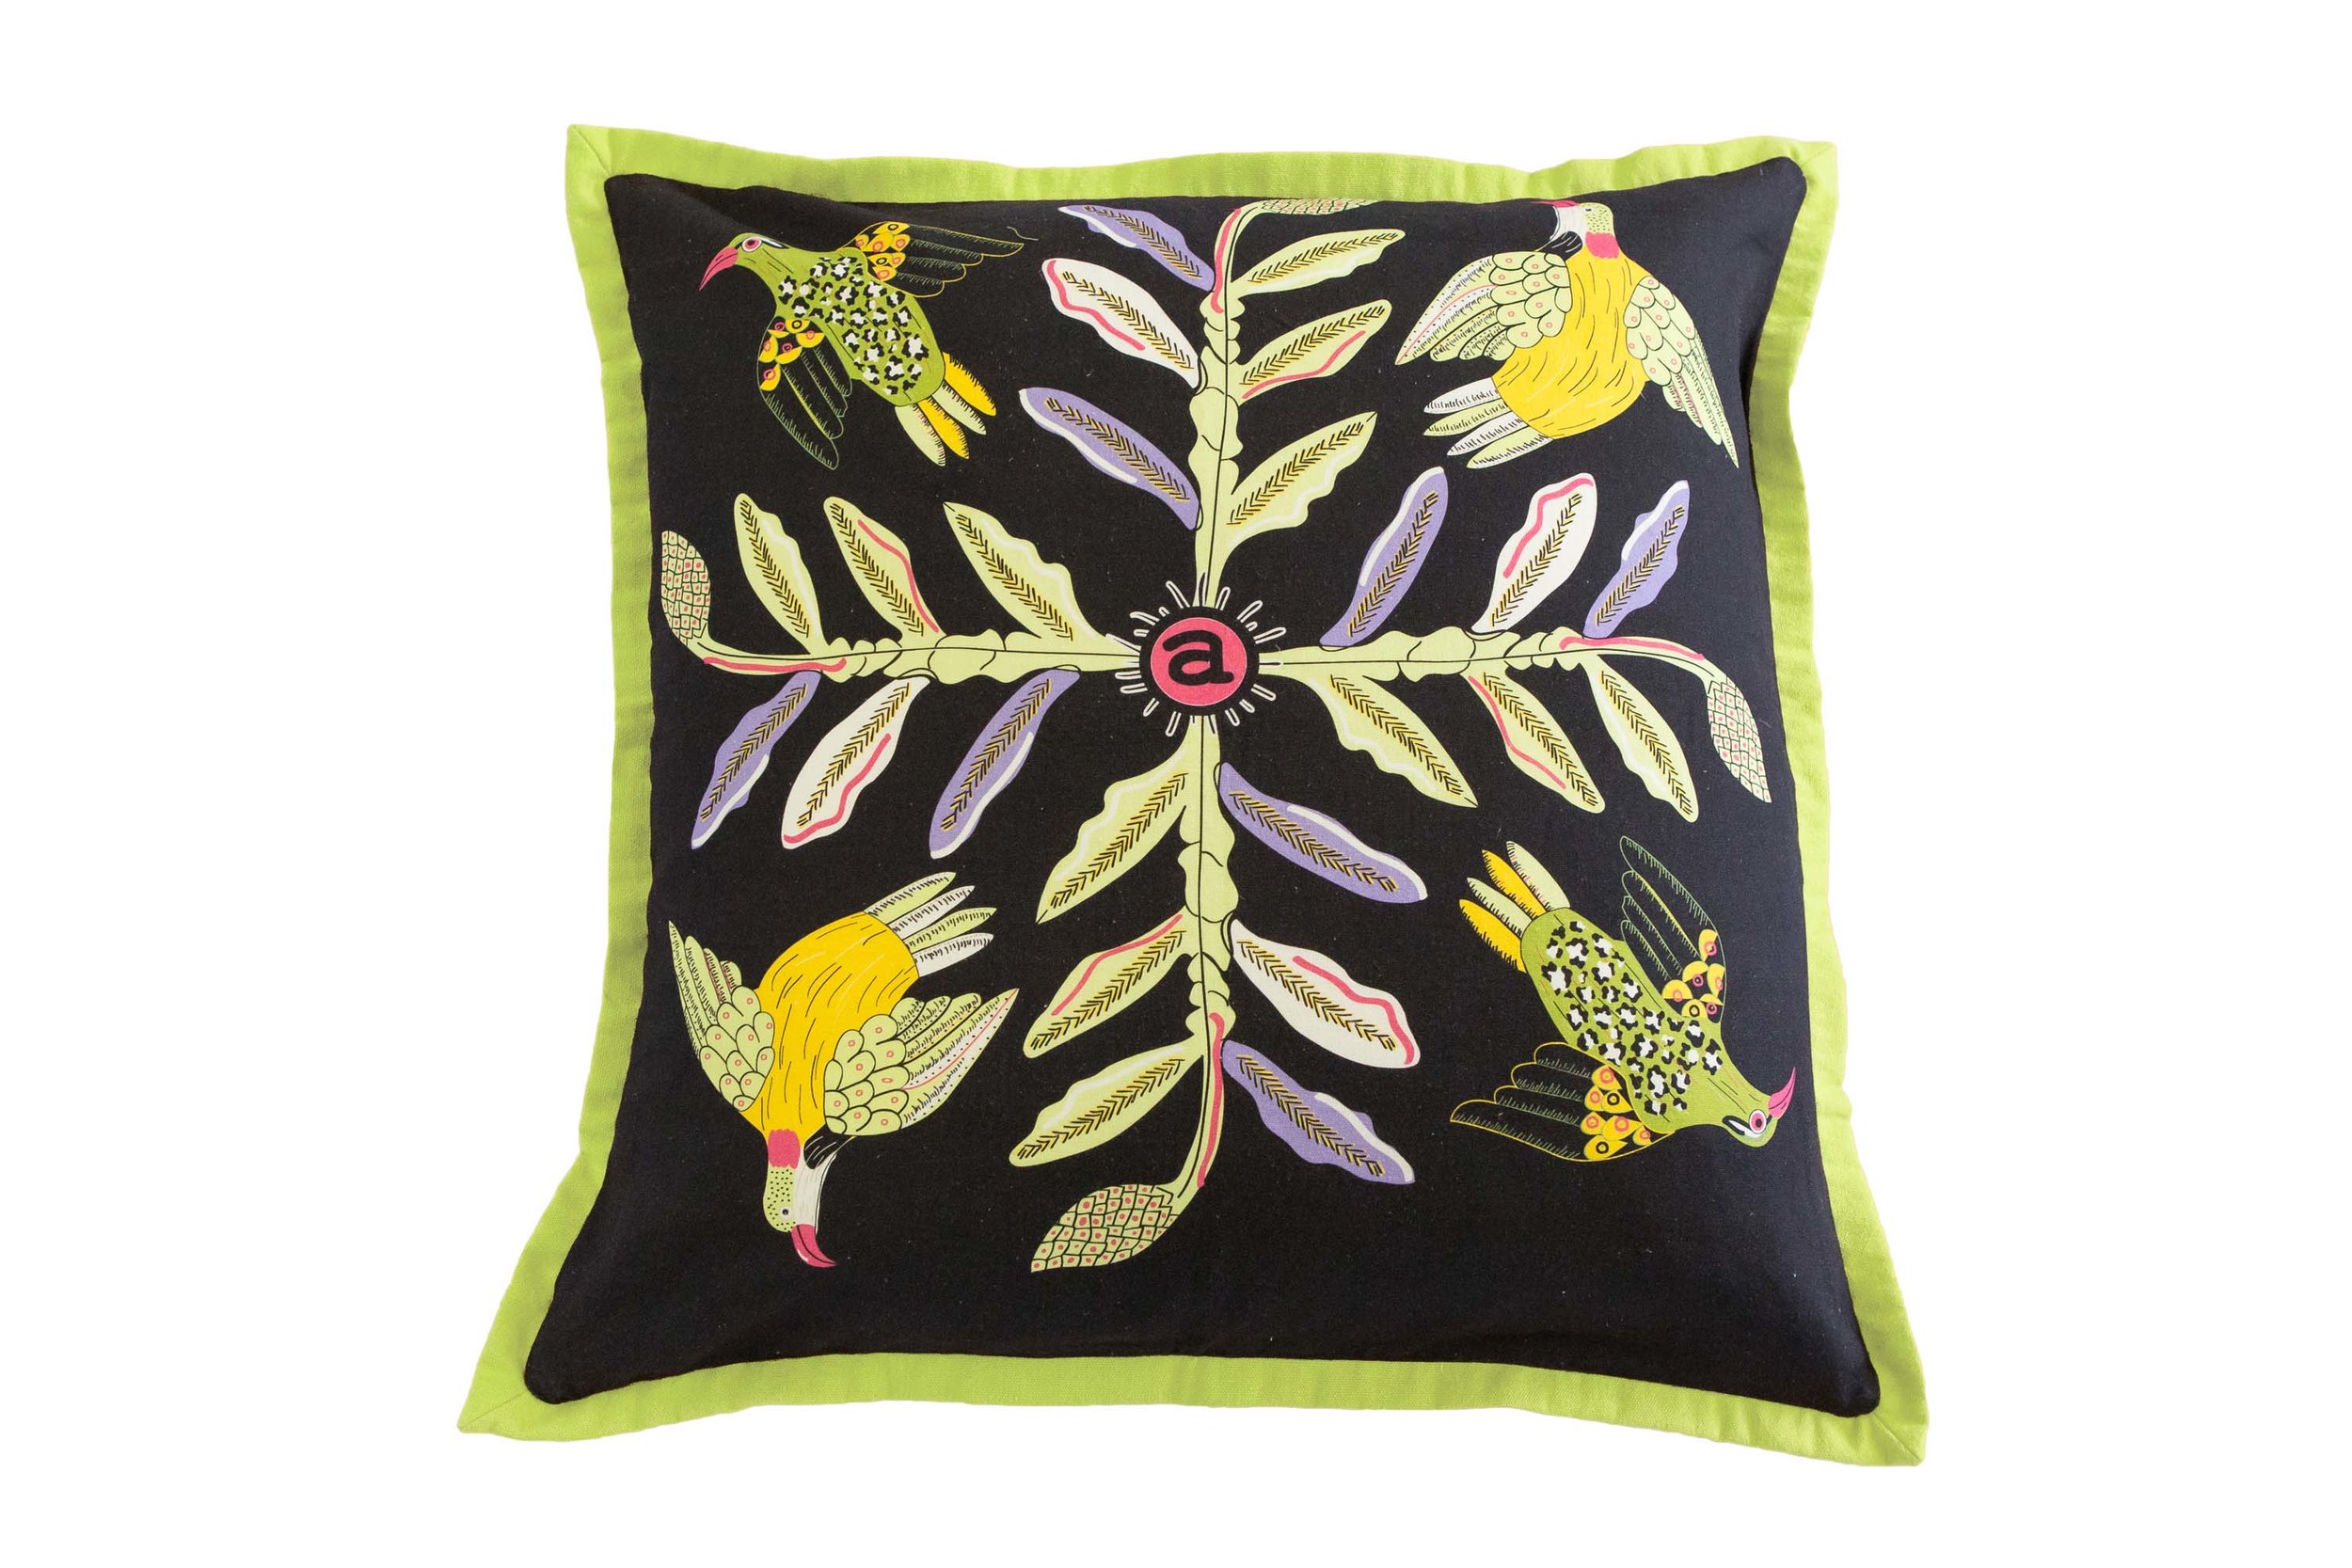 Halsted Bird Crossing cushion